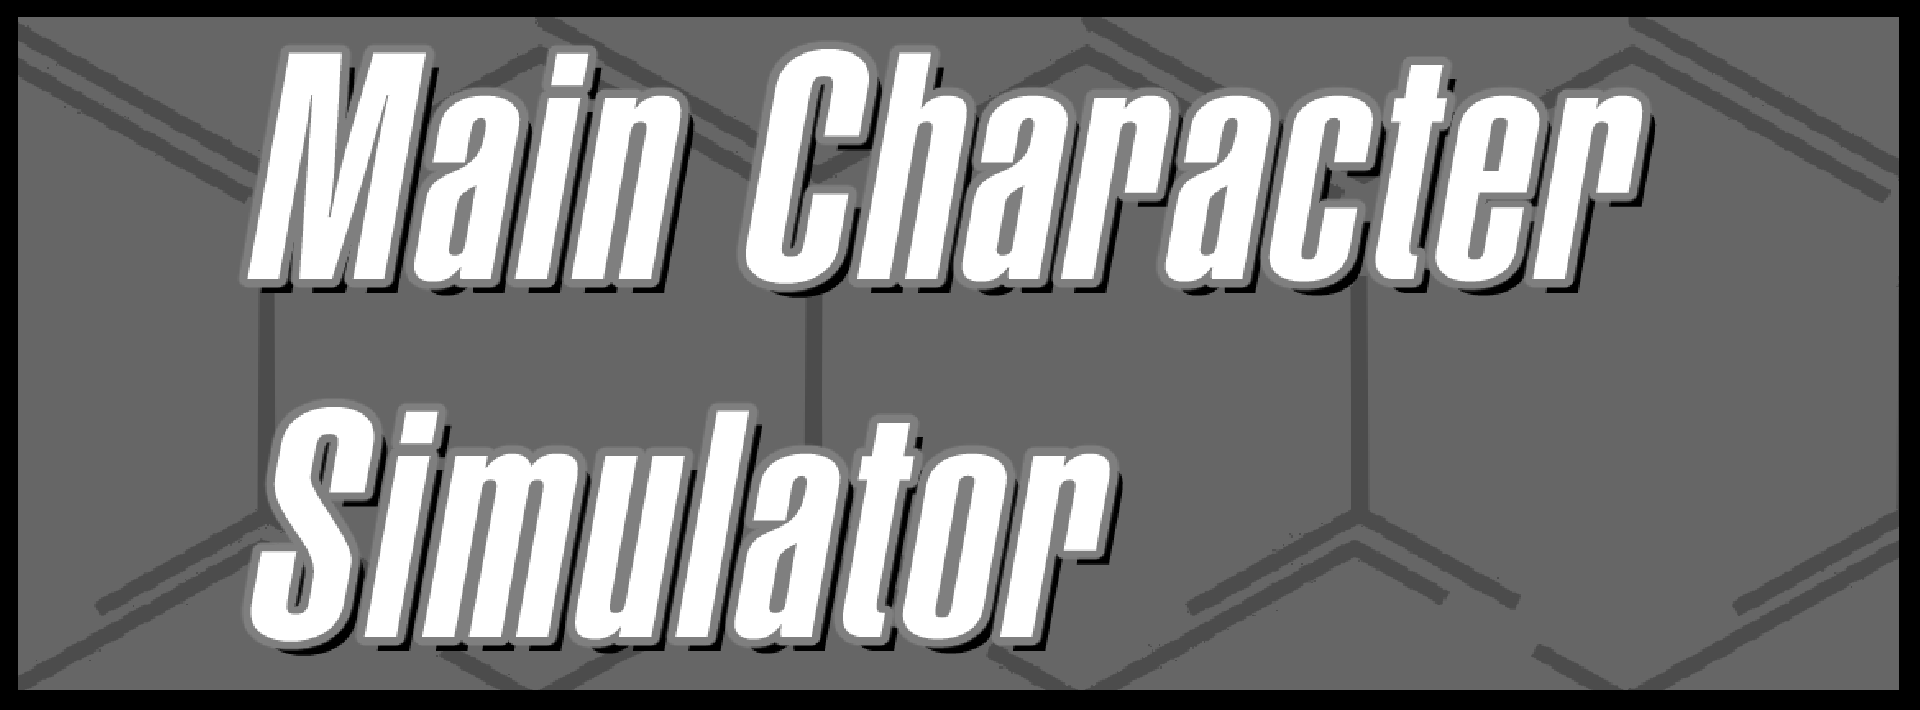 Main Character Simulator